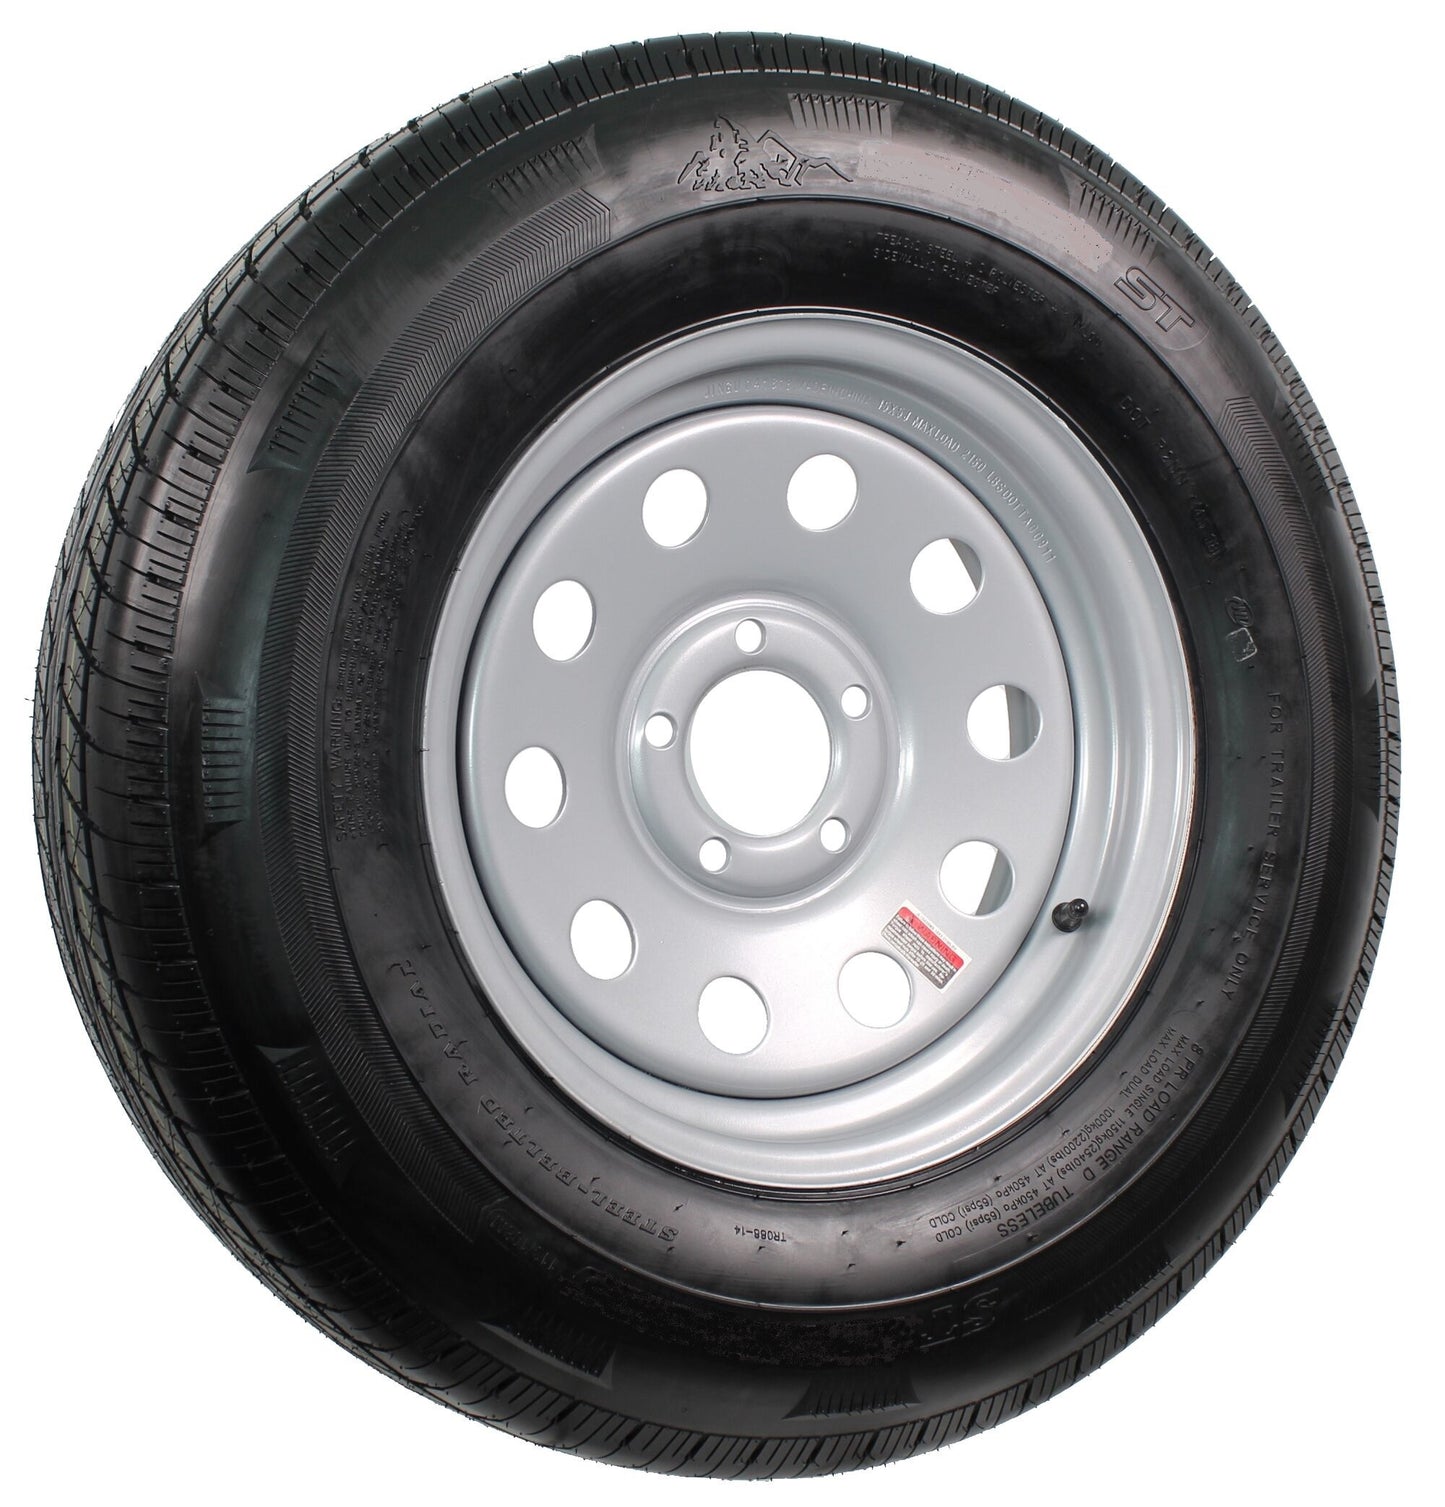 Trailer Tire ST215/75R14 LRC 1870 Lb. 5-4.5 Silver Modular Wheel Rim 3.19 CB